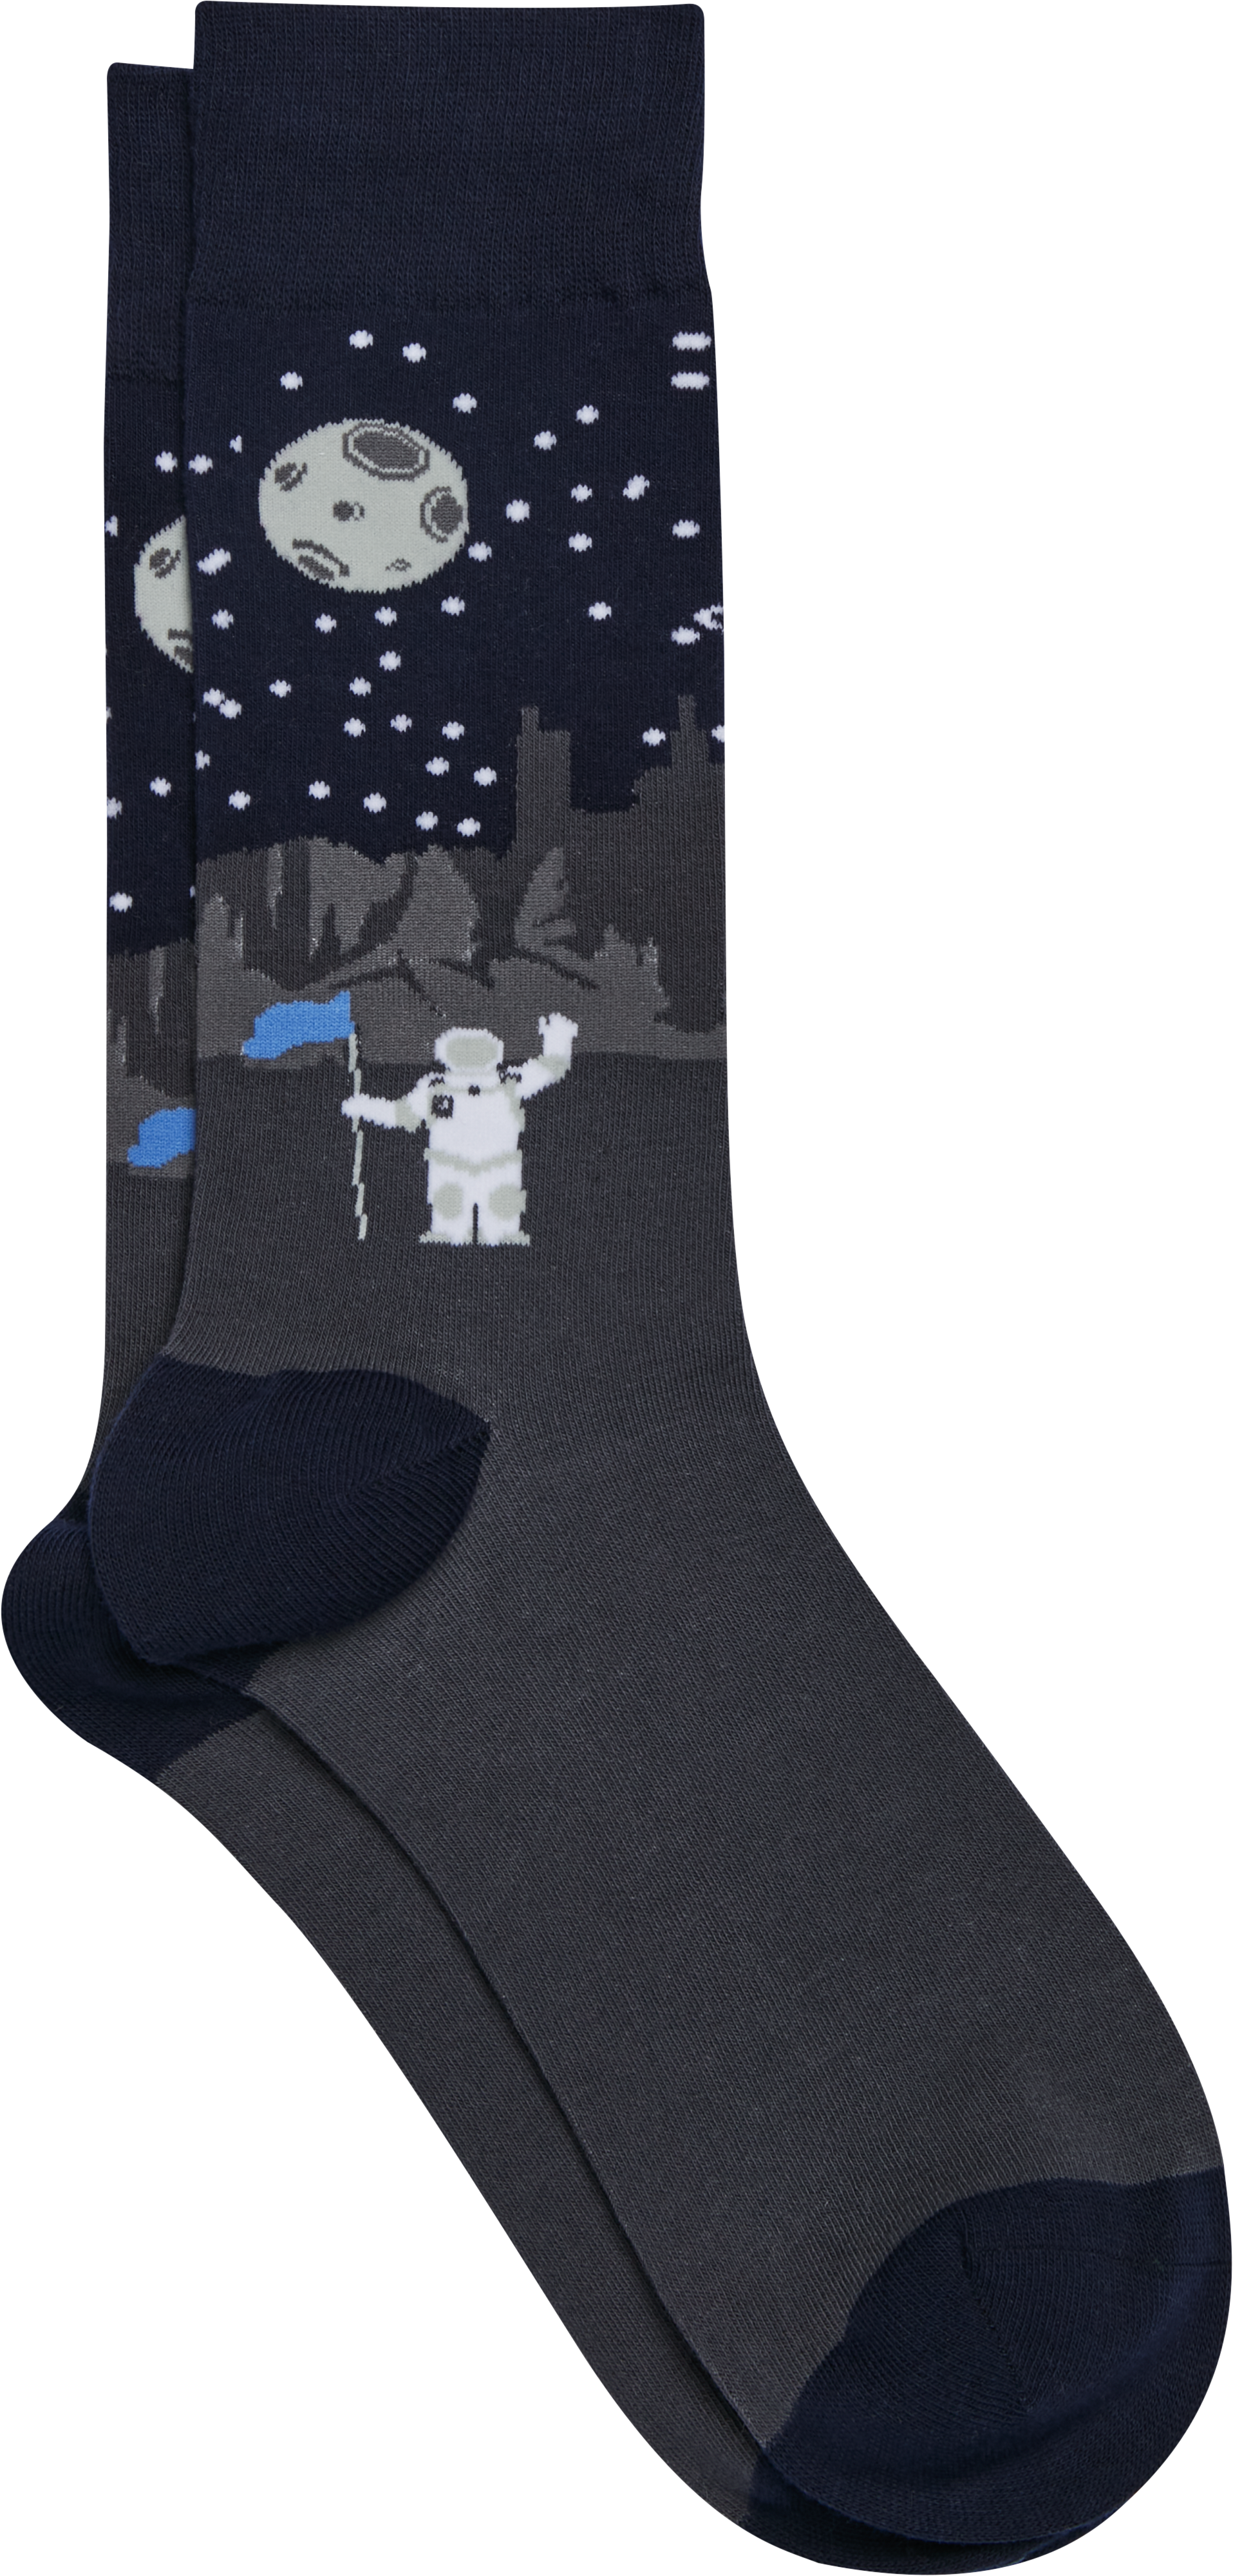 Astronaut and Planet Socks